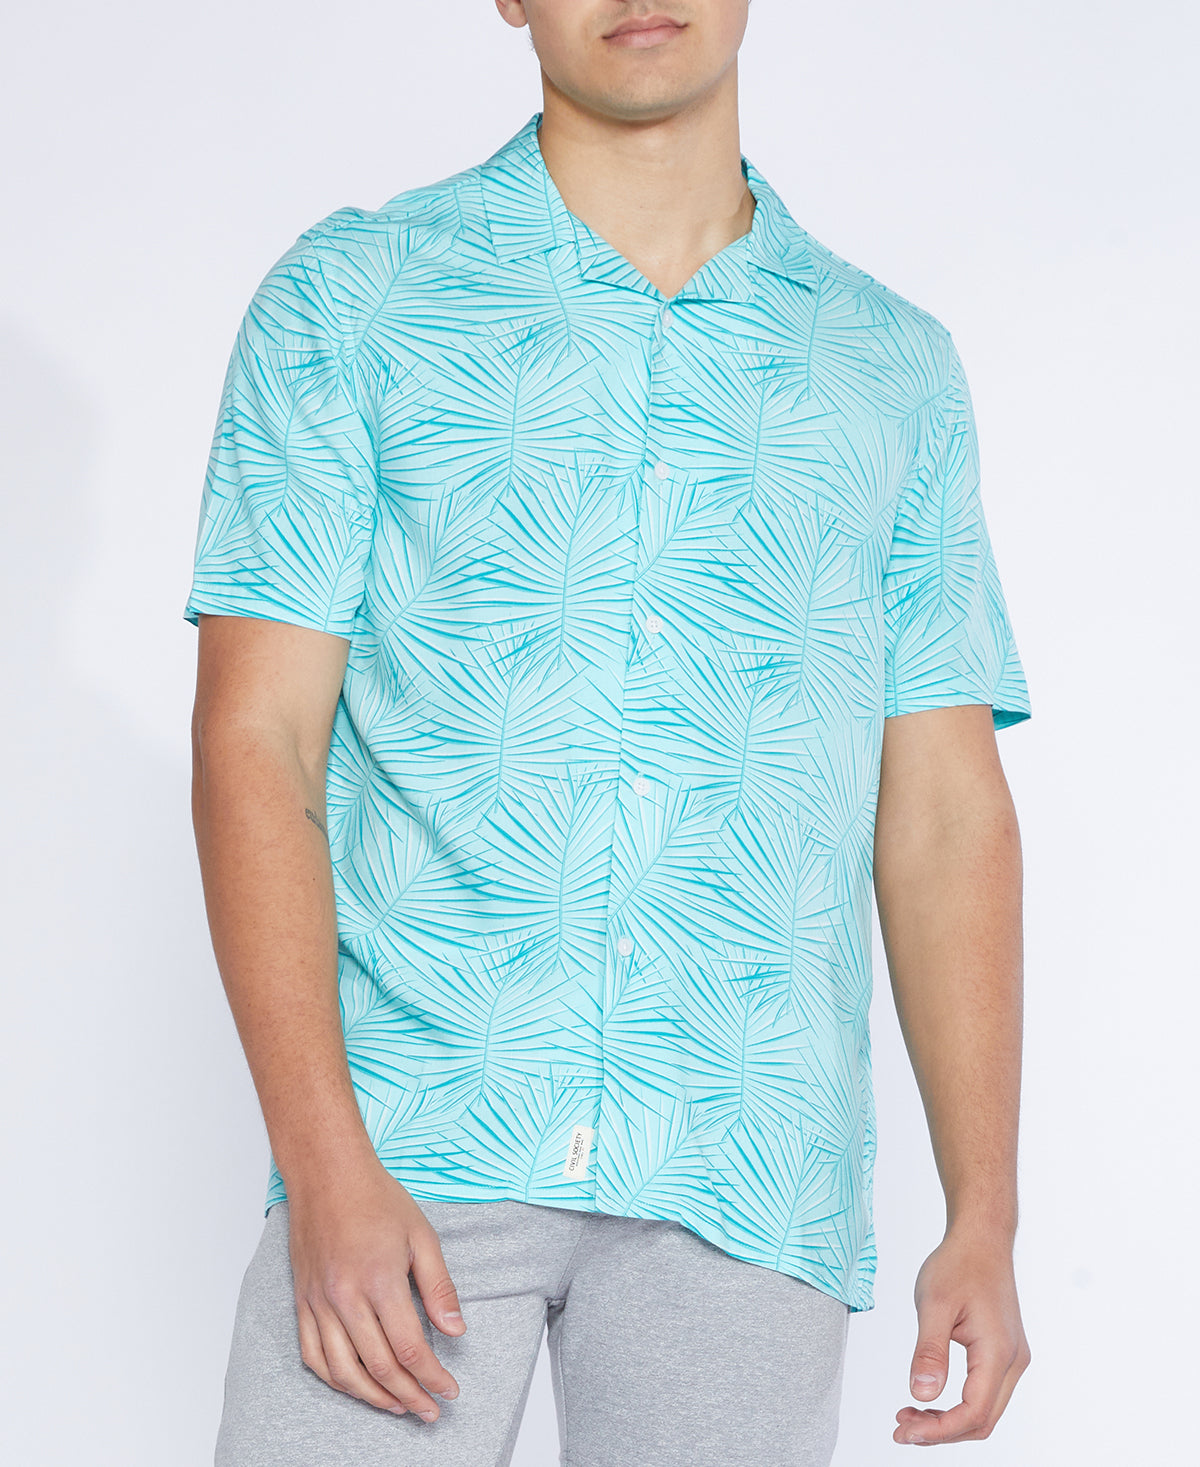 SOCIETY Shirt (Turquoise) Resort – Printed Frond CIVIL